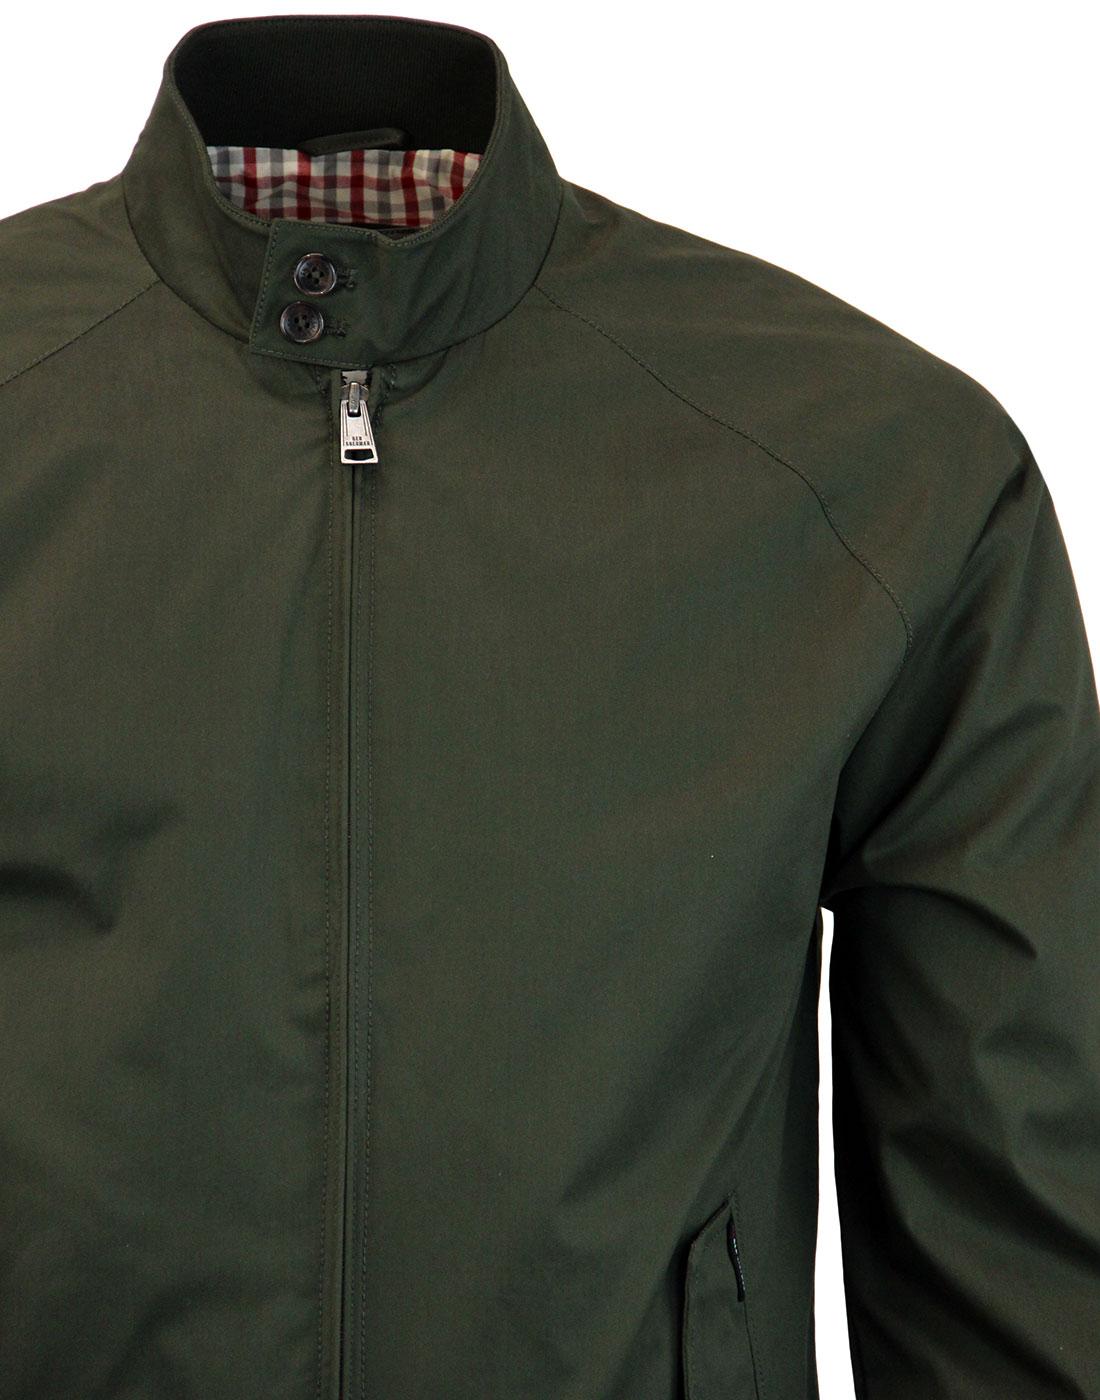 BEN SHERMAN Men's 1960s Mod Retro Harrington Jacket in Dark Green